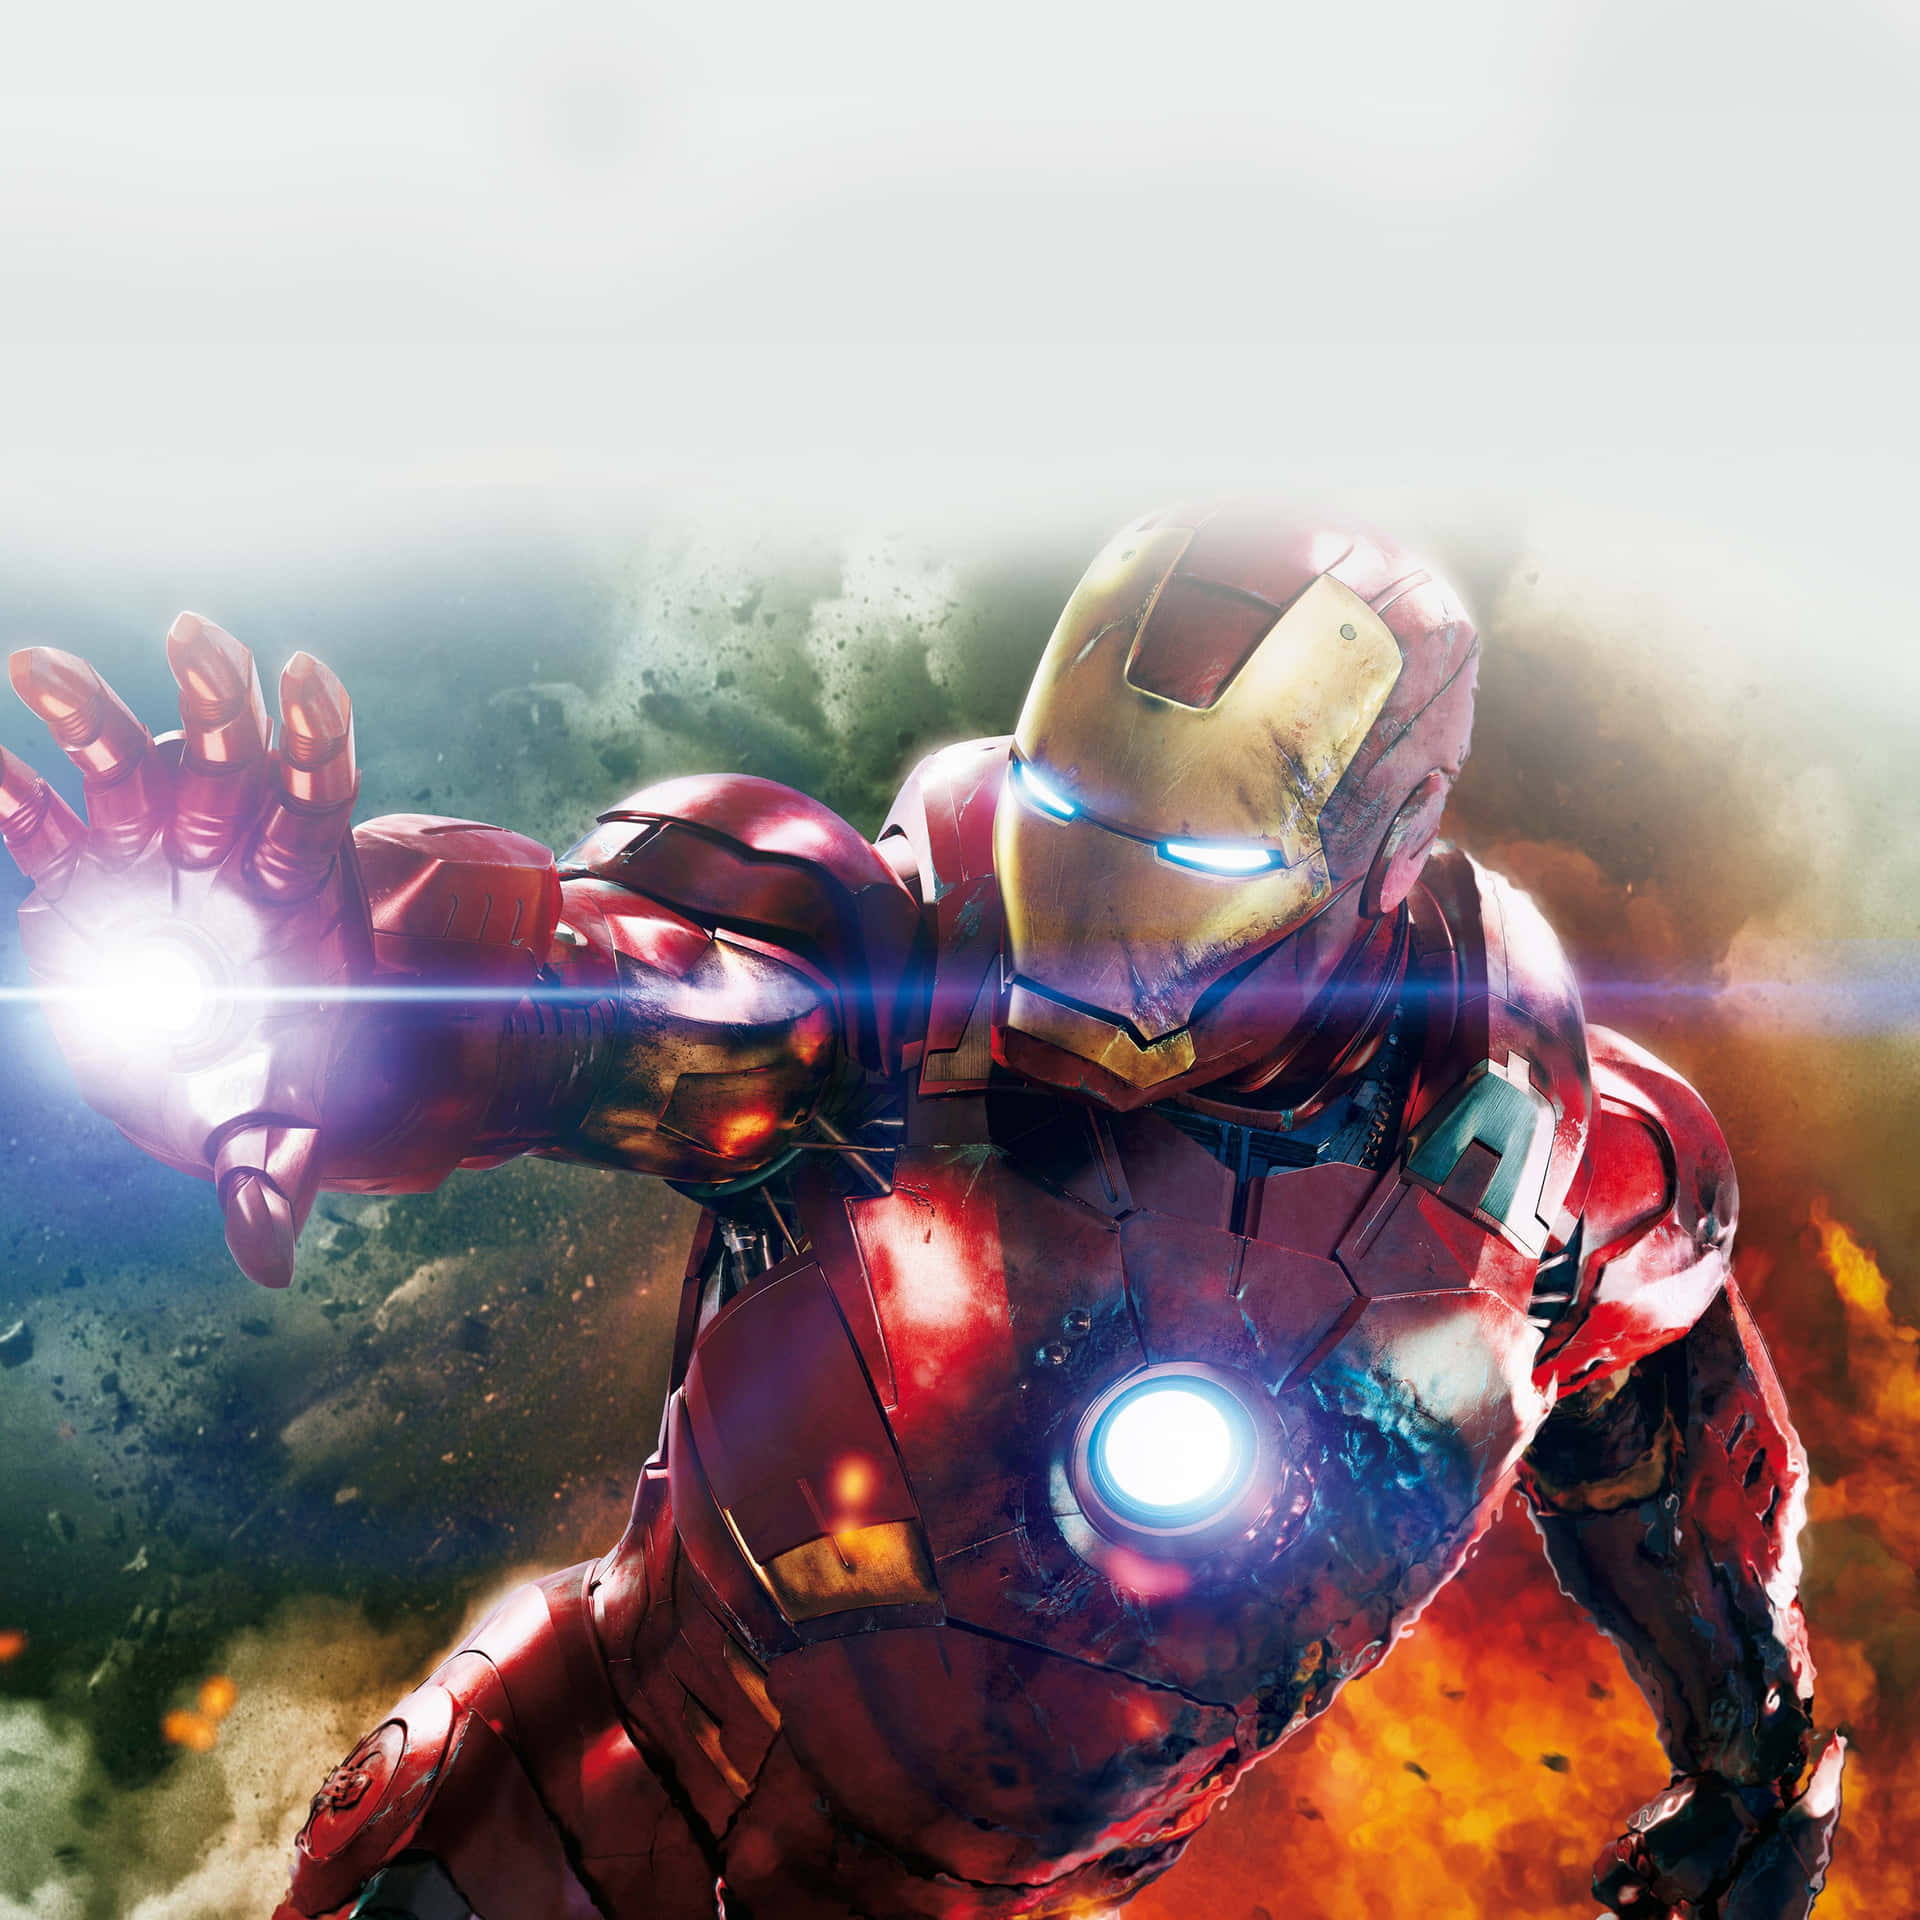 Iron Man In Action.jpg Wallpaper